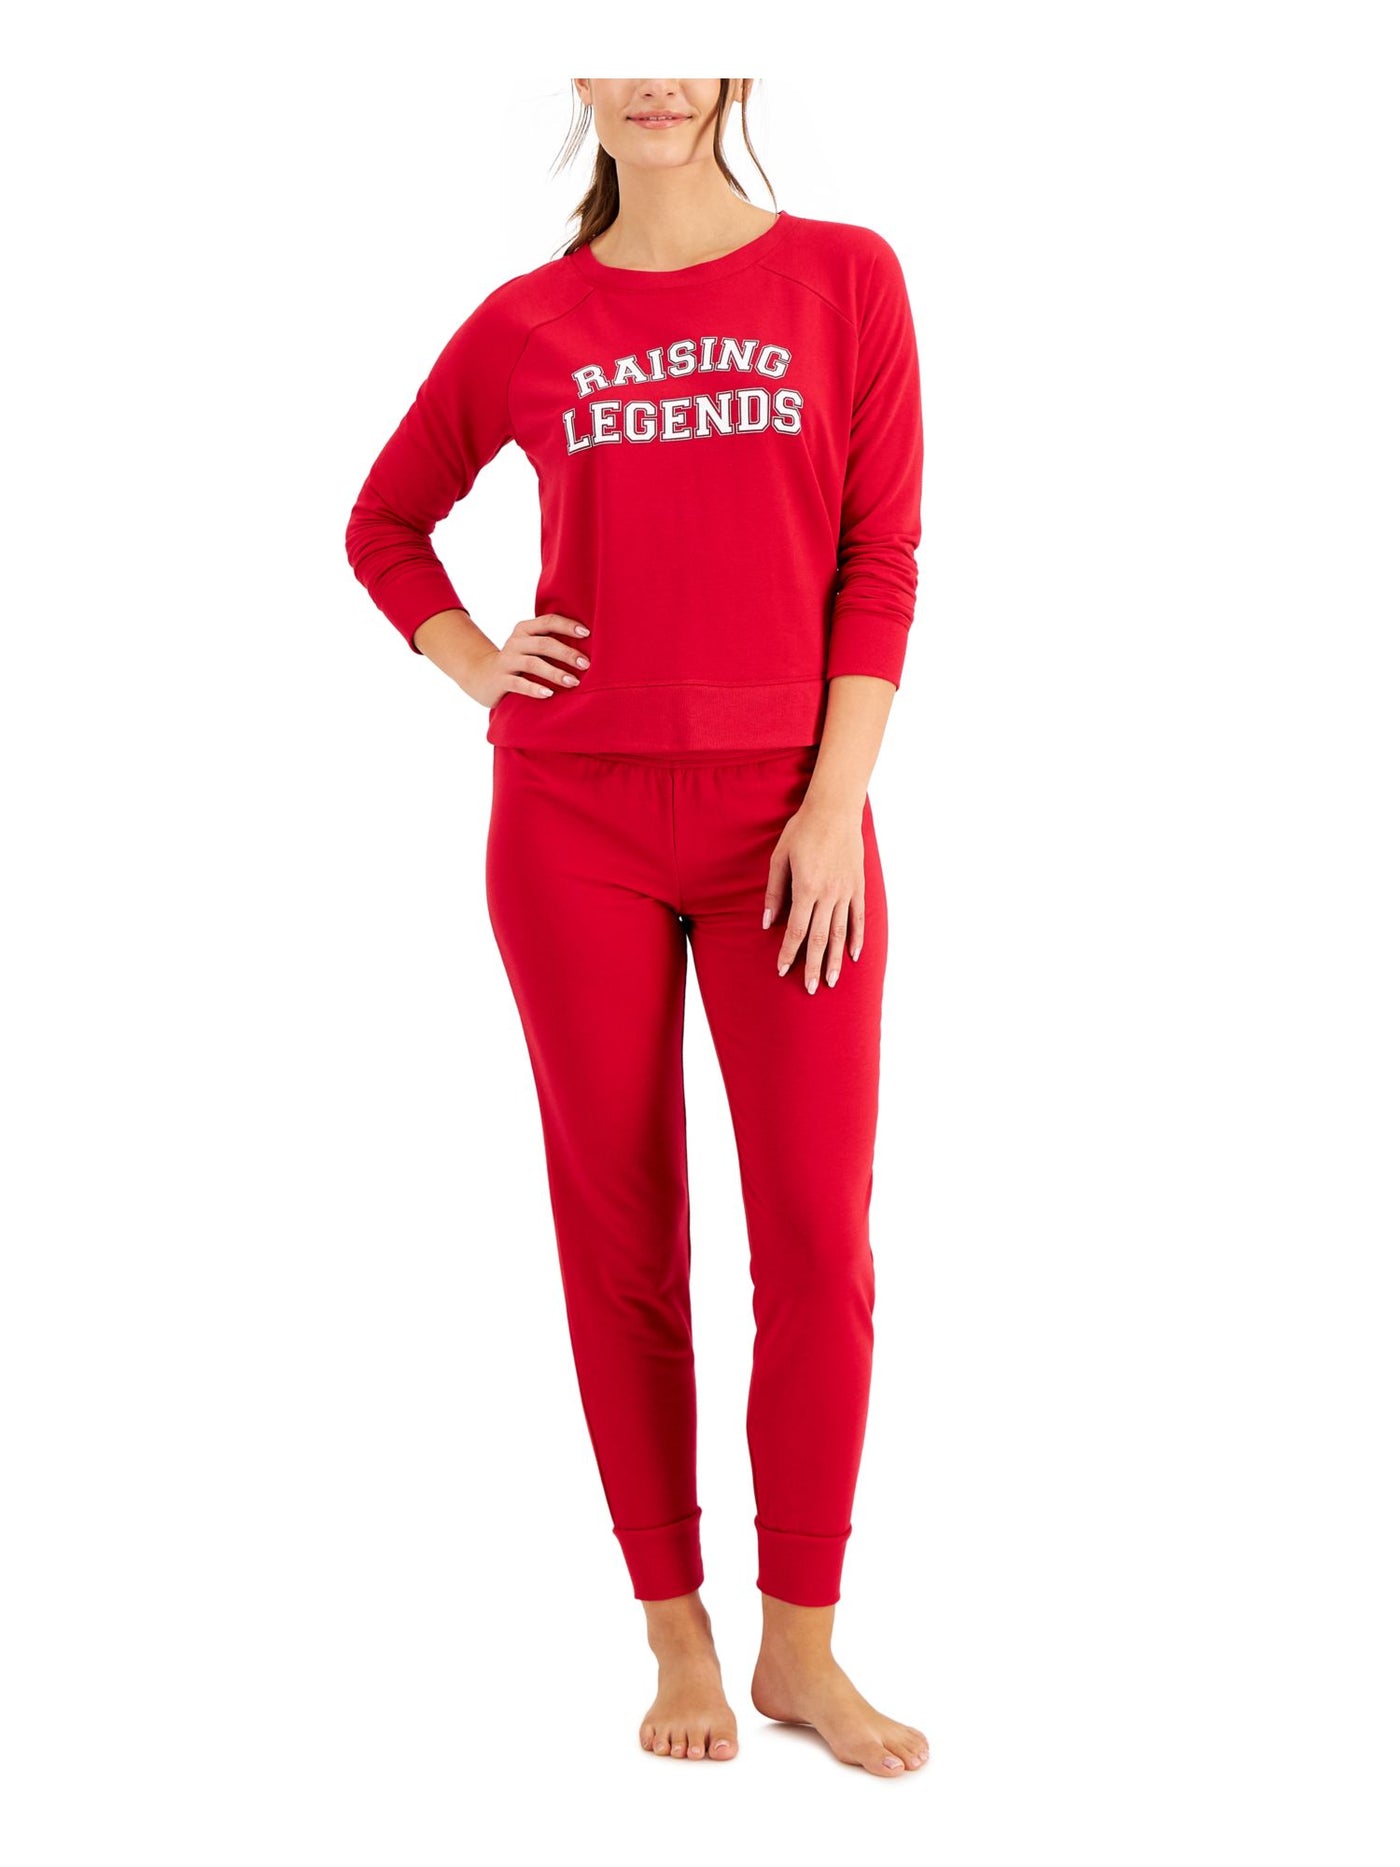 FAMILY PJs Womens Red Printed Top Elastic Band Long Sleeve Lounge Pants Pajamas L